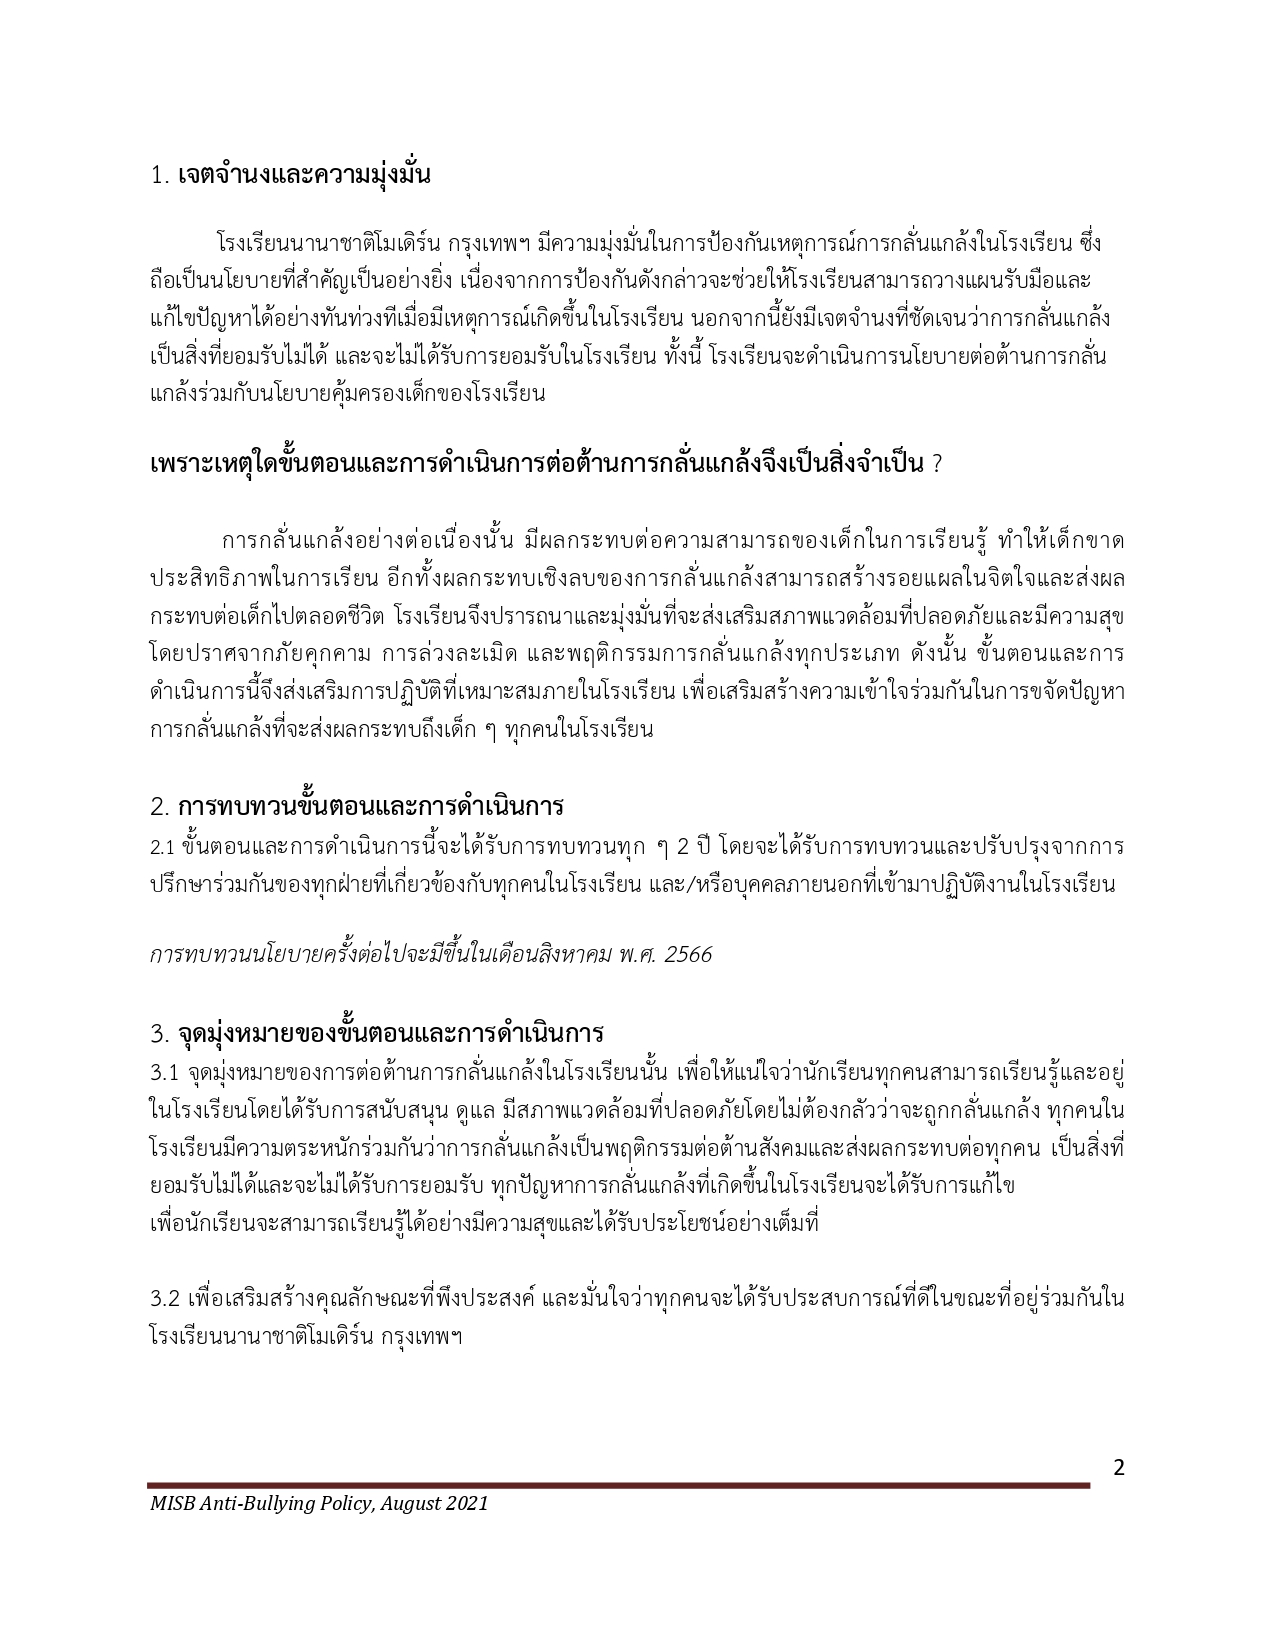 Anti Bullying Policy 2021 2023 Thai Language page 0004